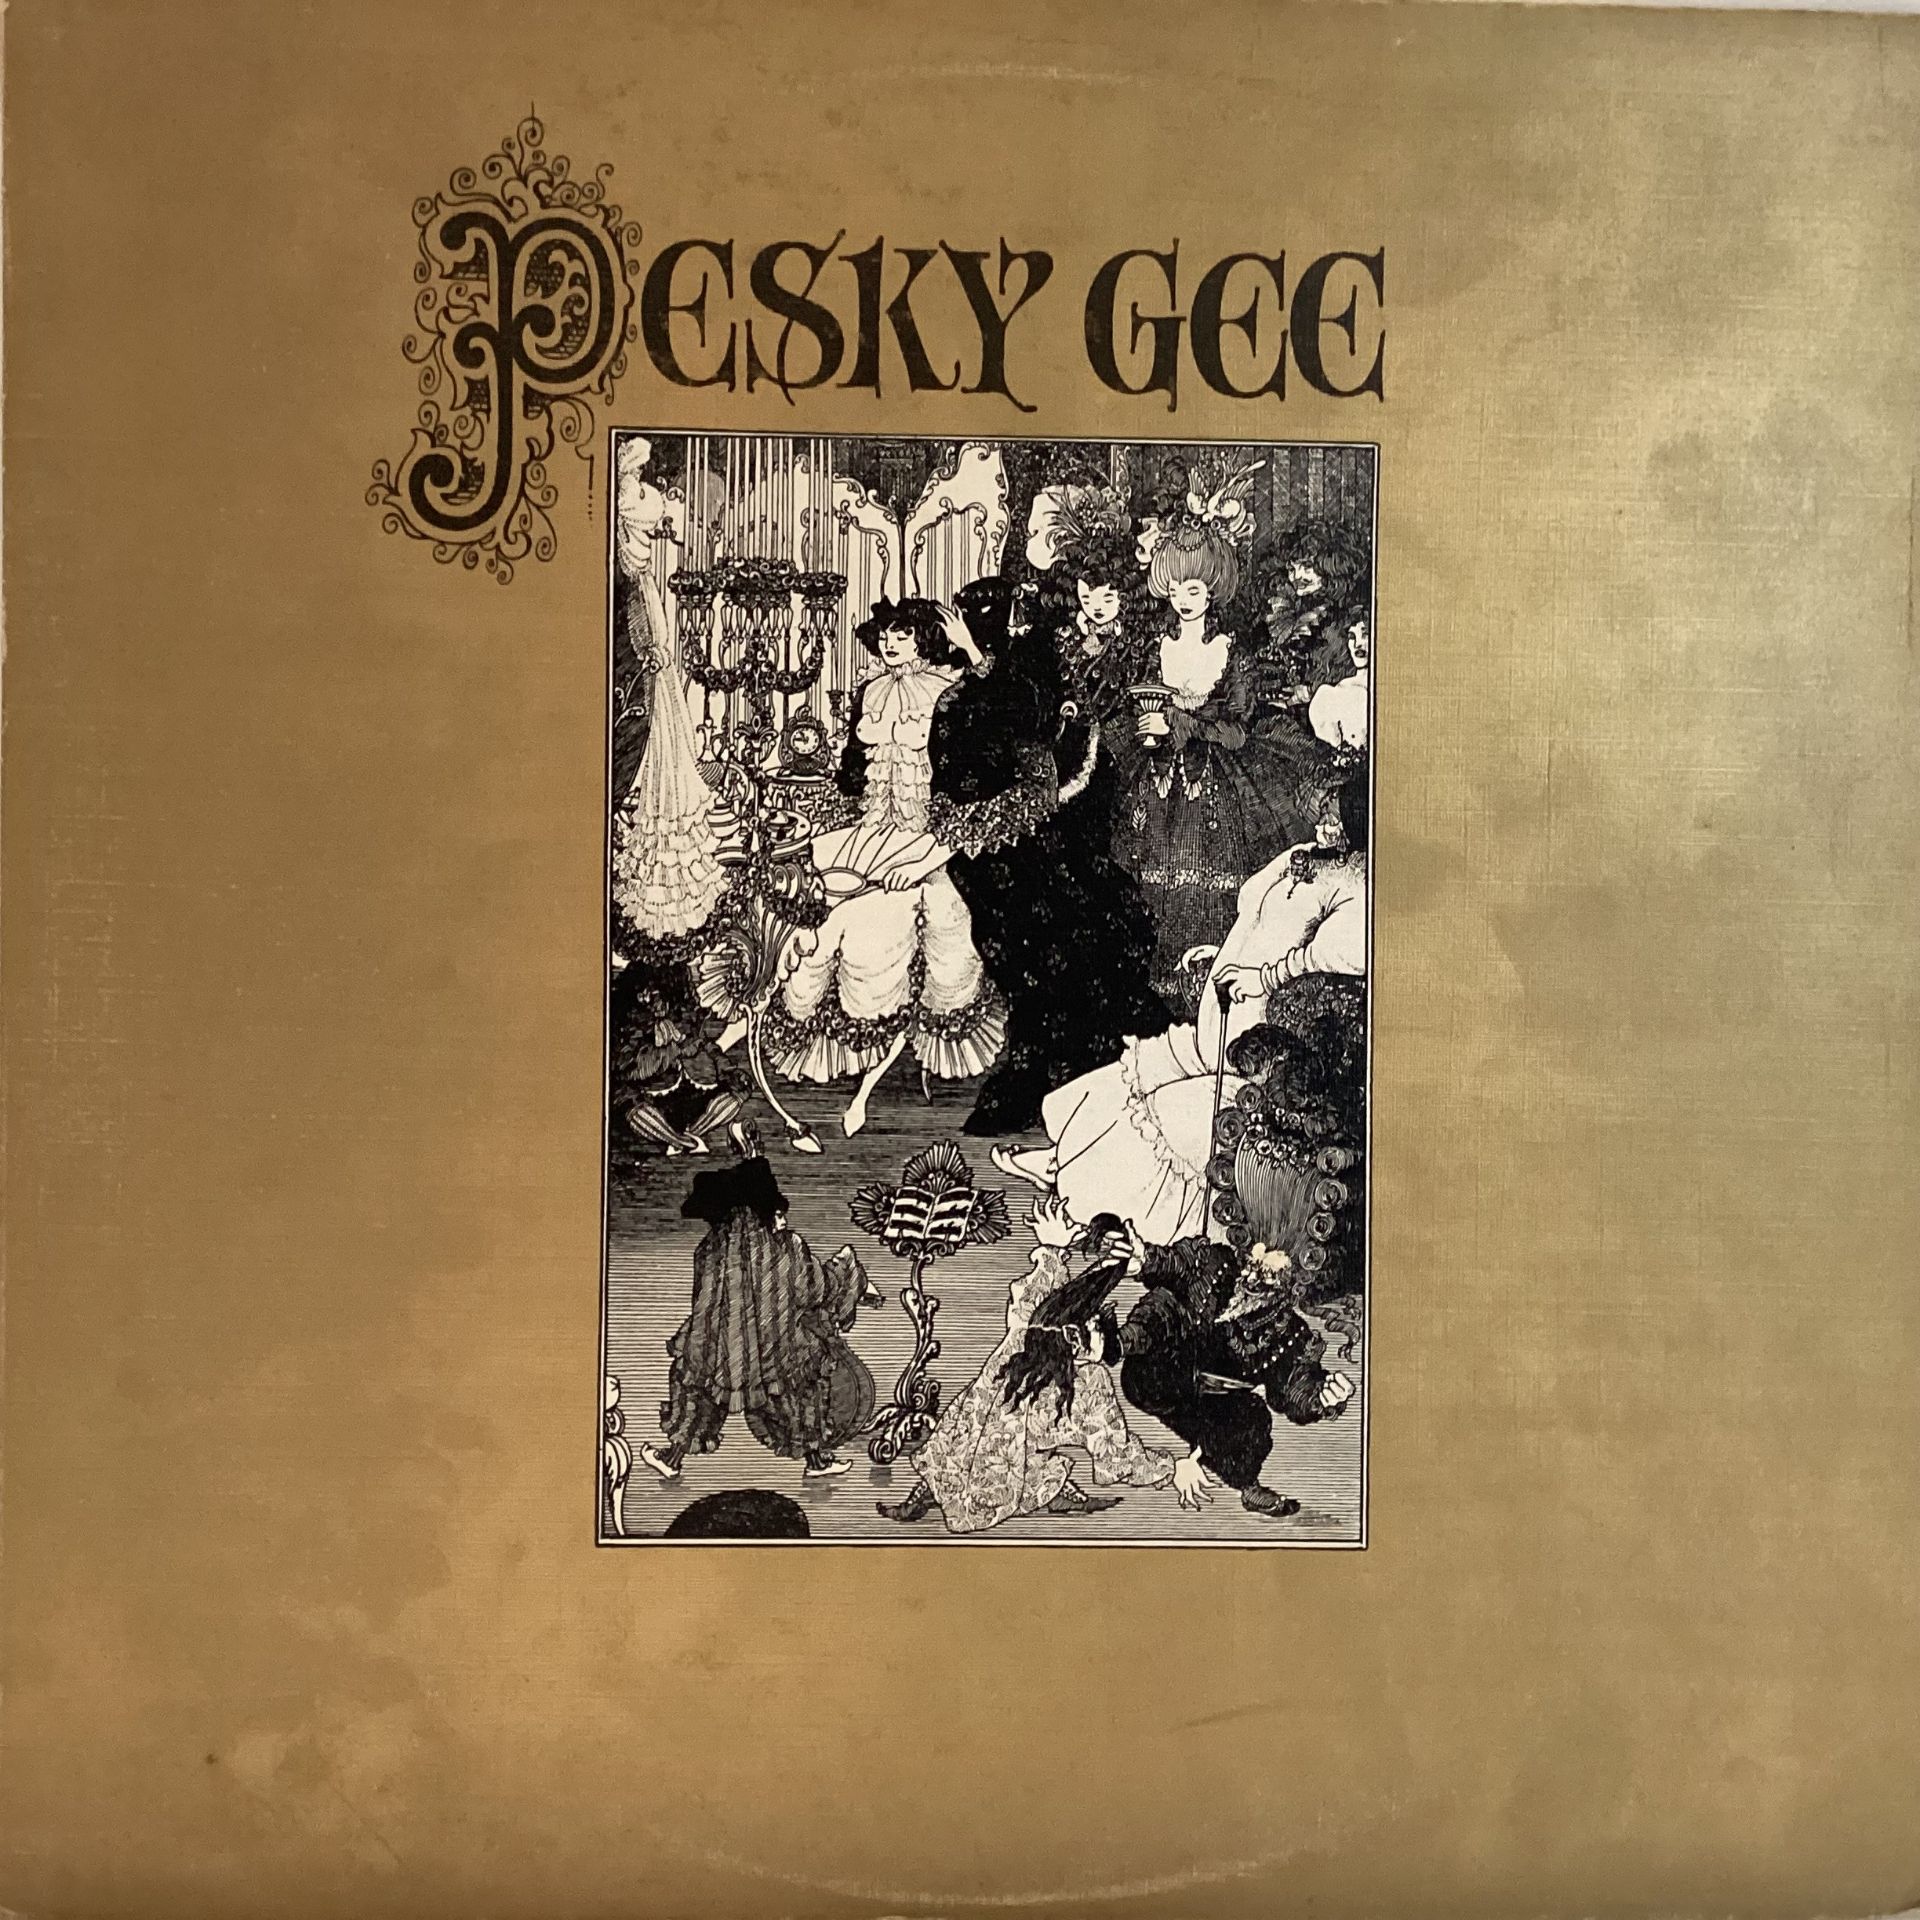 PESKY GEE ‘EXCLAMATION MARK’ MONO UK VINYL ALBUM. Rare original MONO copy made in UK – textured